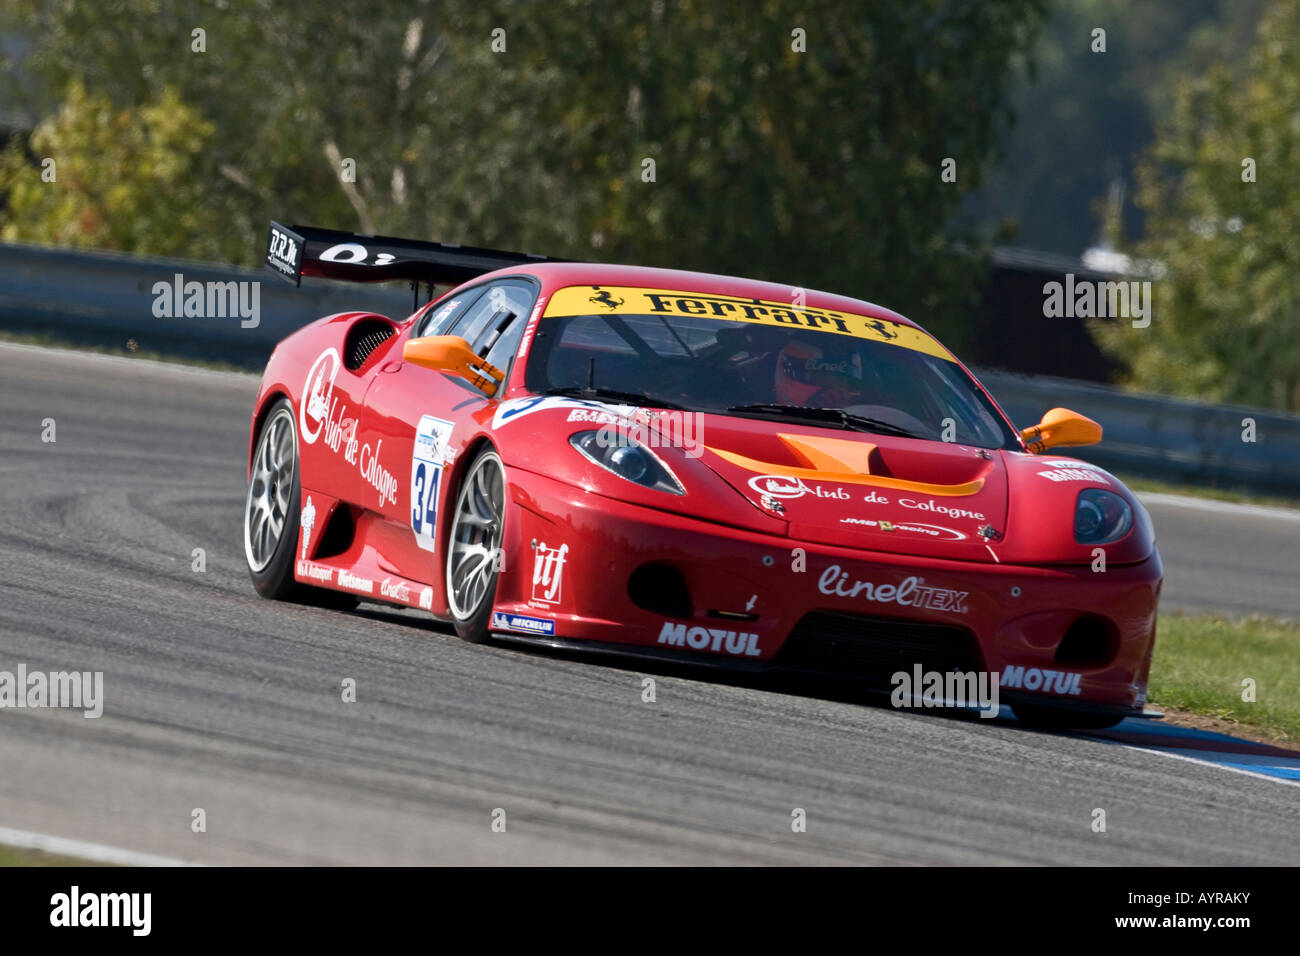 Ferrari, FIA GT2 Race, Brno, Tschechische Republik, Europa Stockfoto